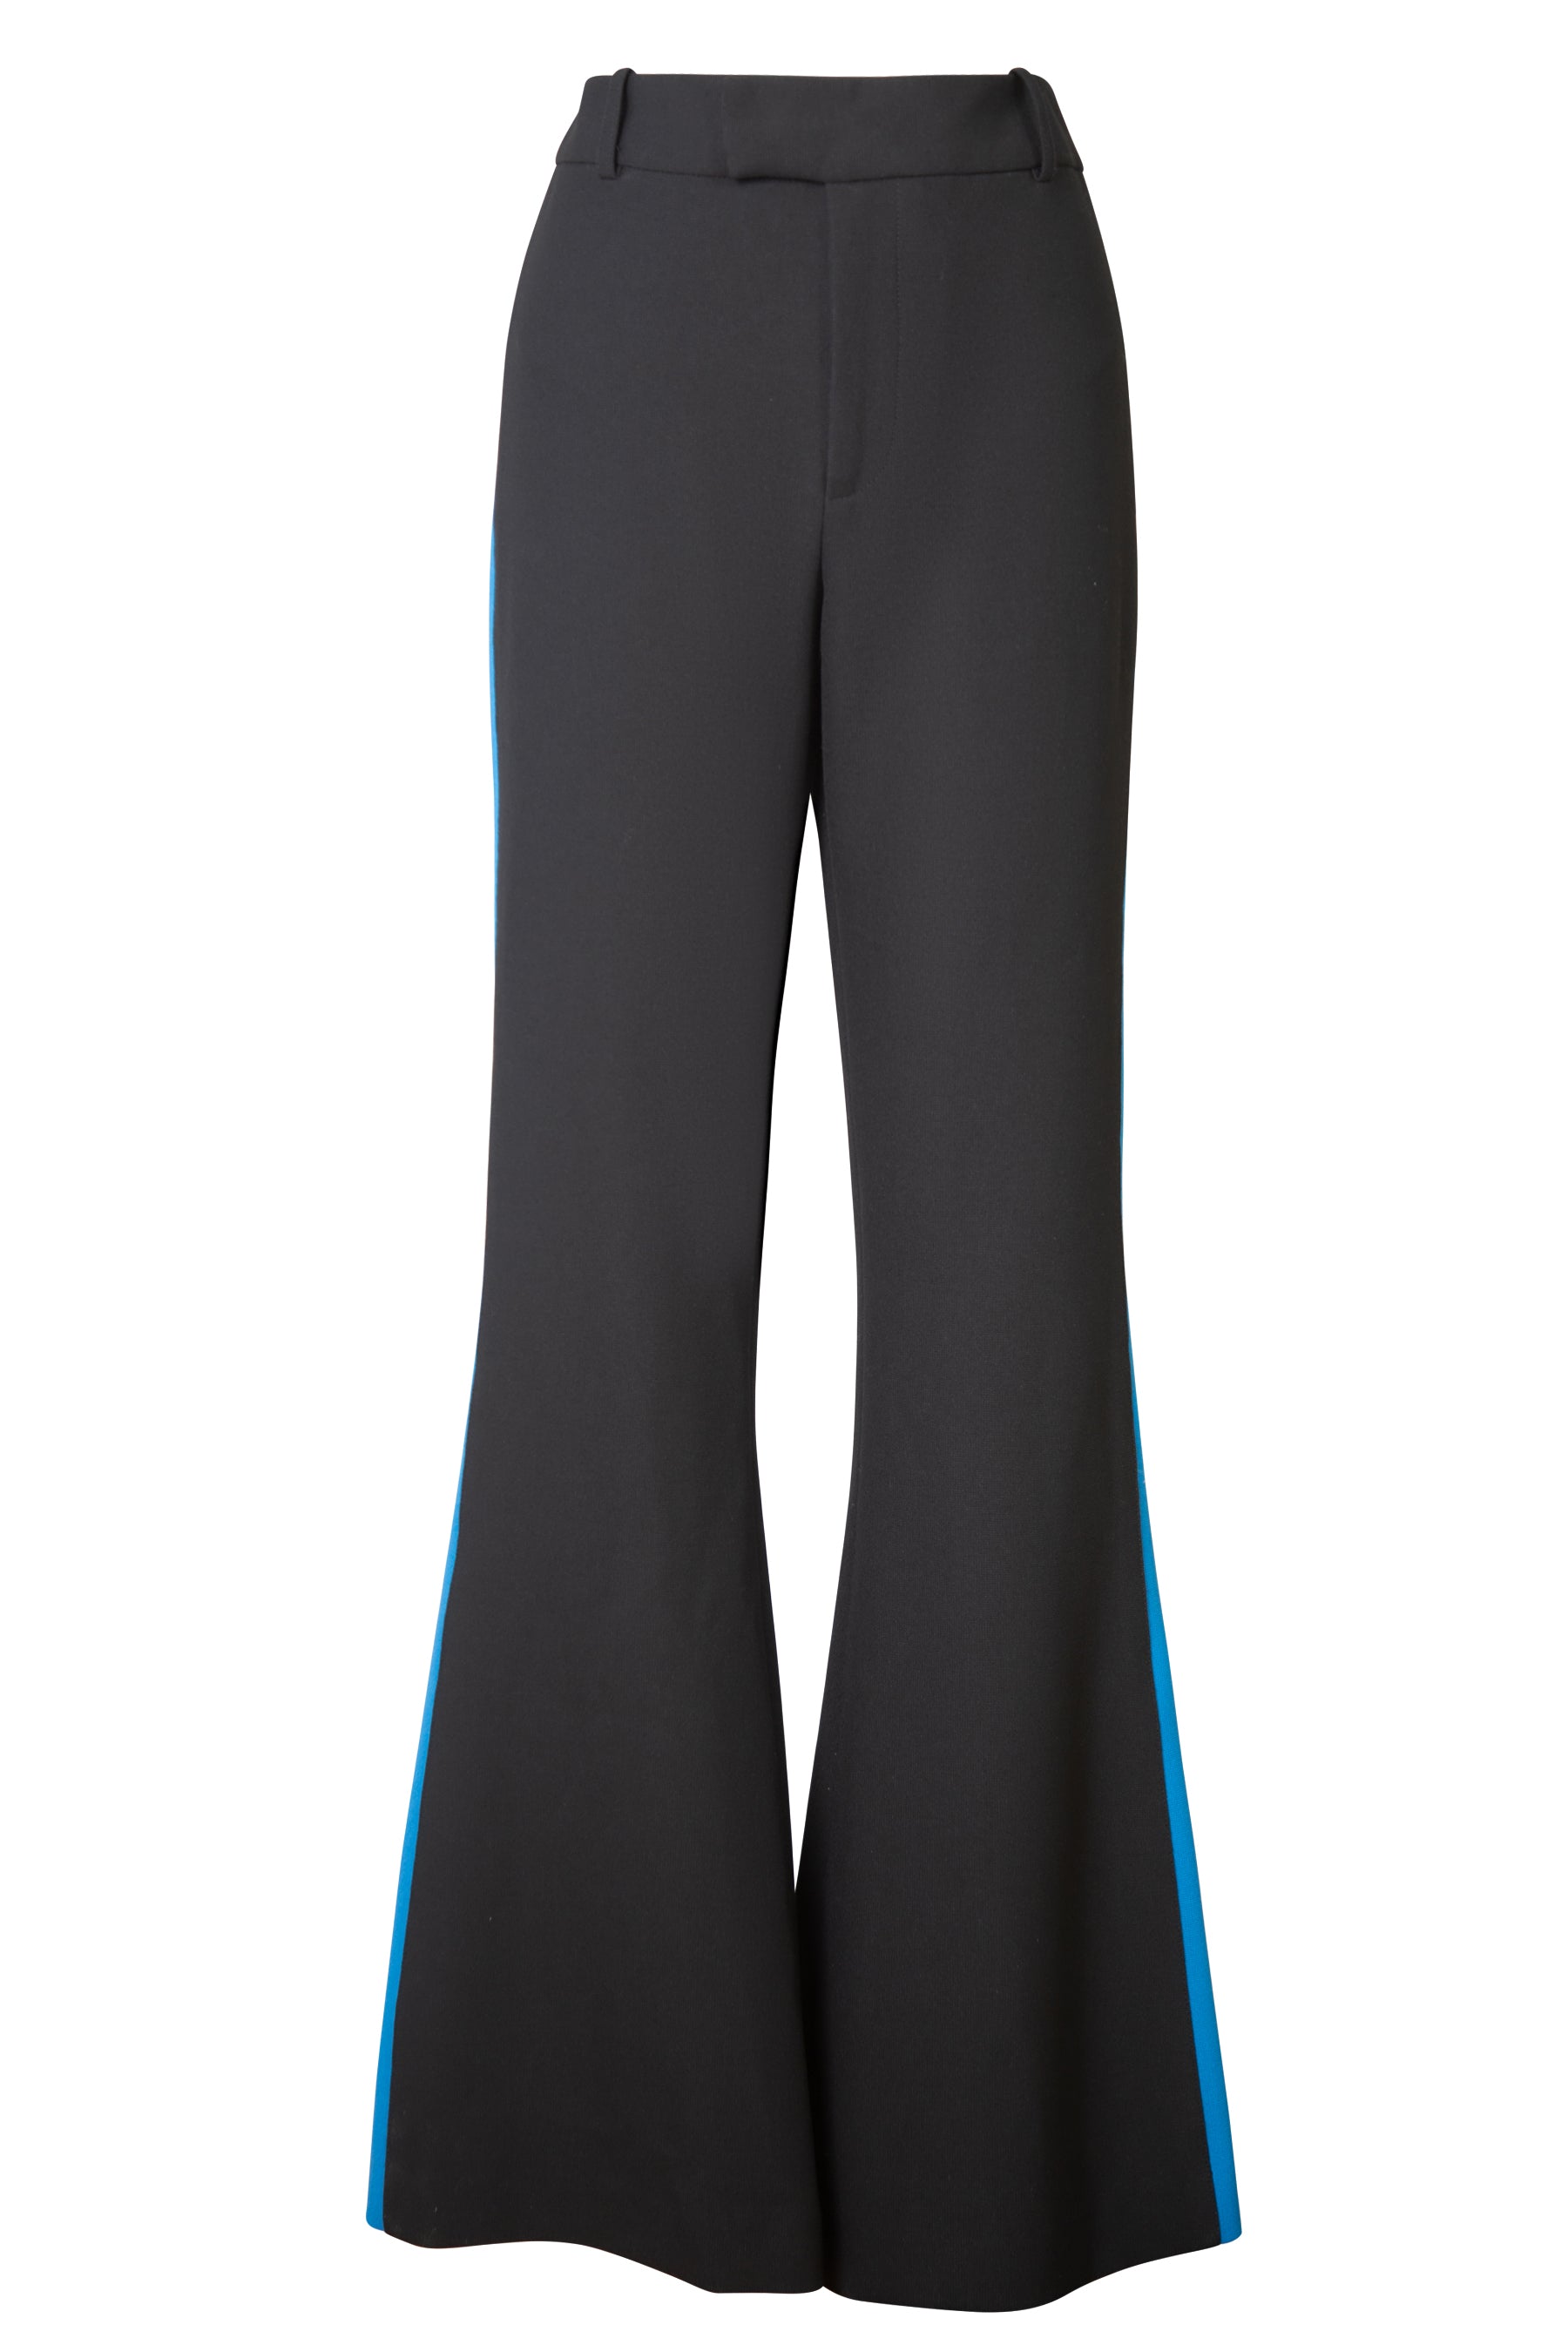 Smythe Tux Stripe Bootcut Pants in Black/Blue